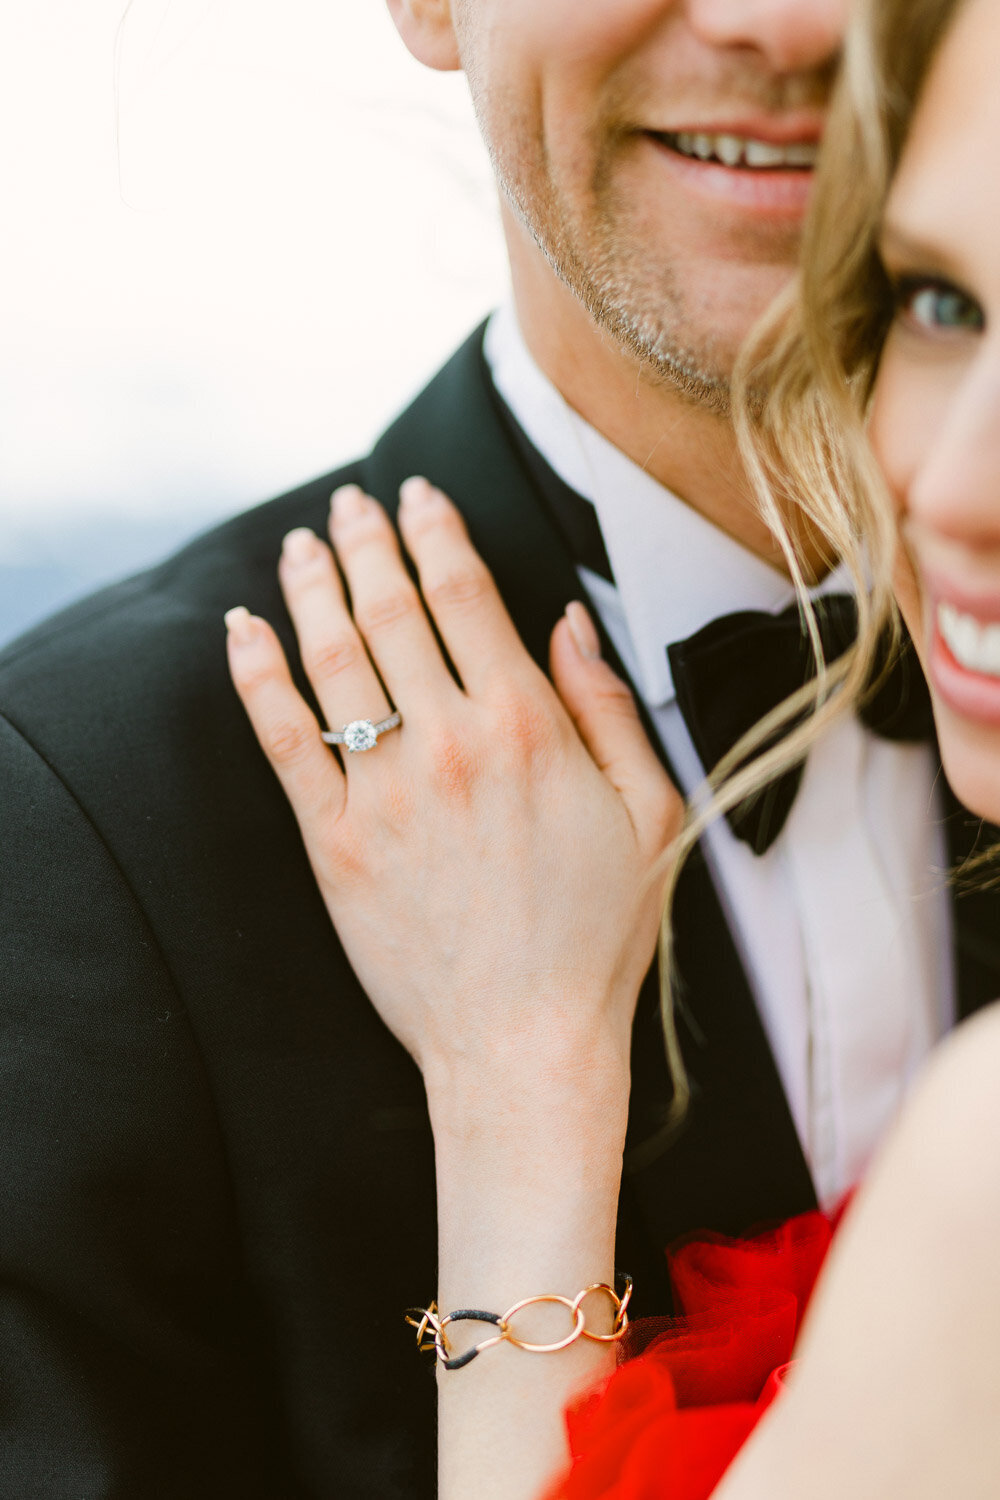 Detail shot of an engagement ring